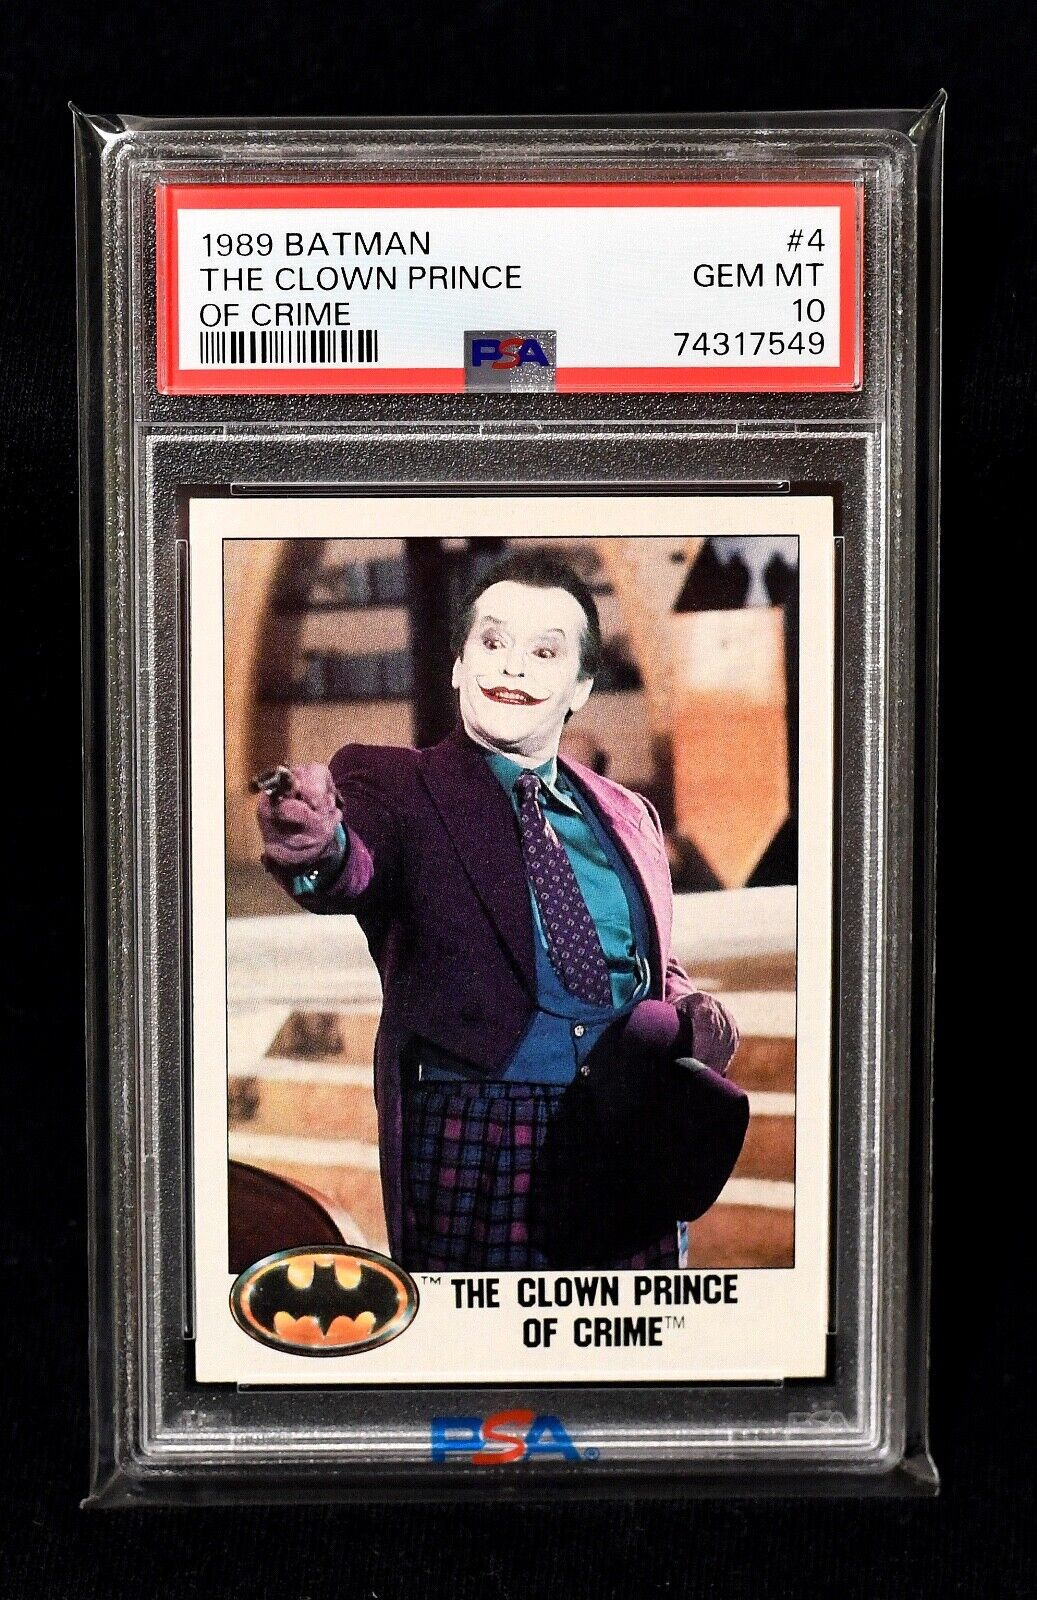 1989 Batman The Clown Prince of Crime #4 (Jack Nicholson as Joker) PSA 10, POP 3